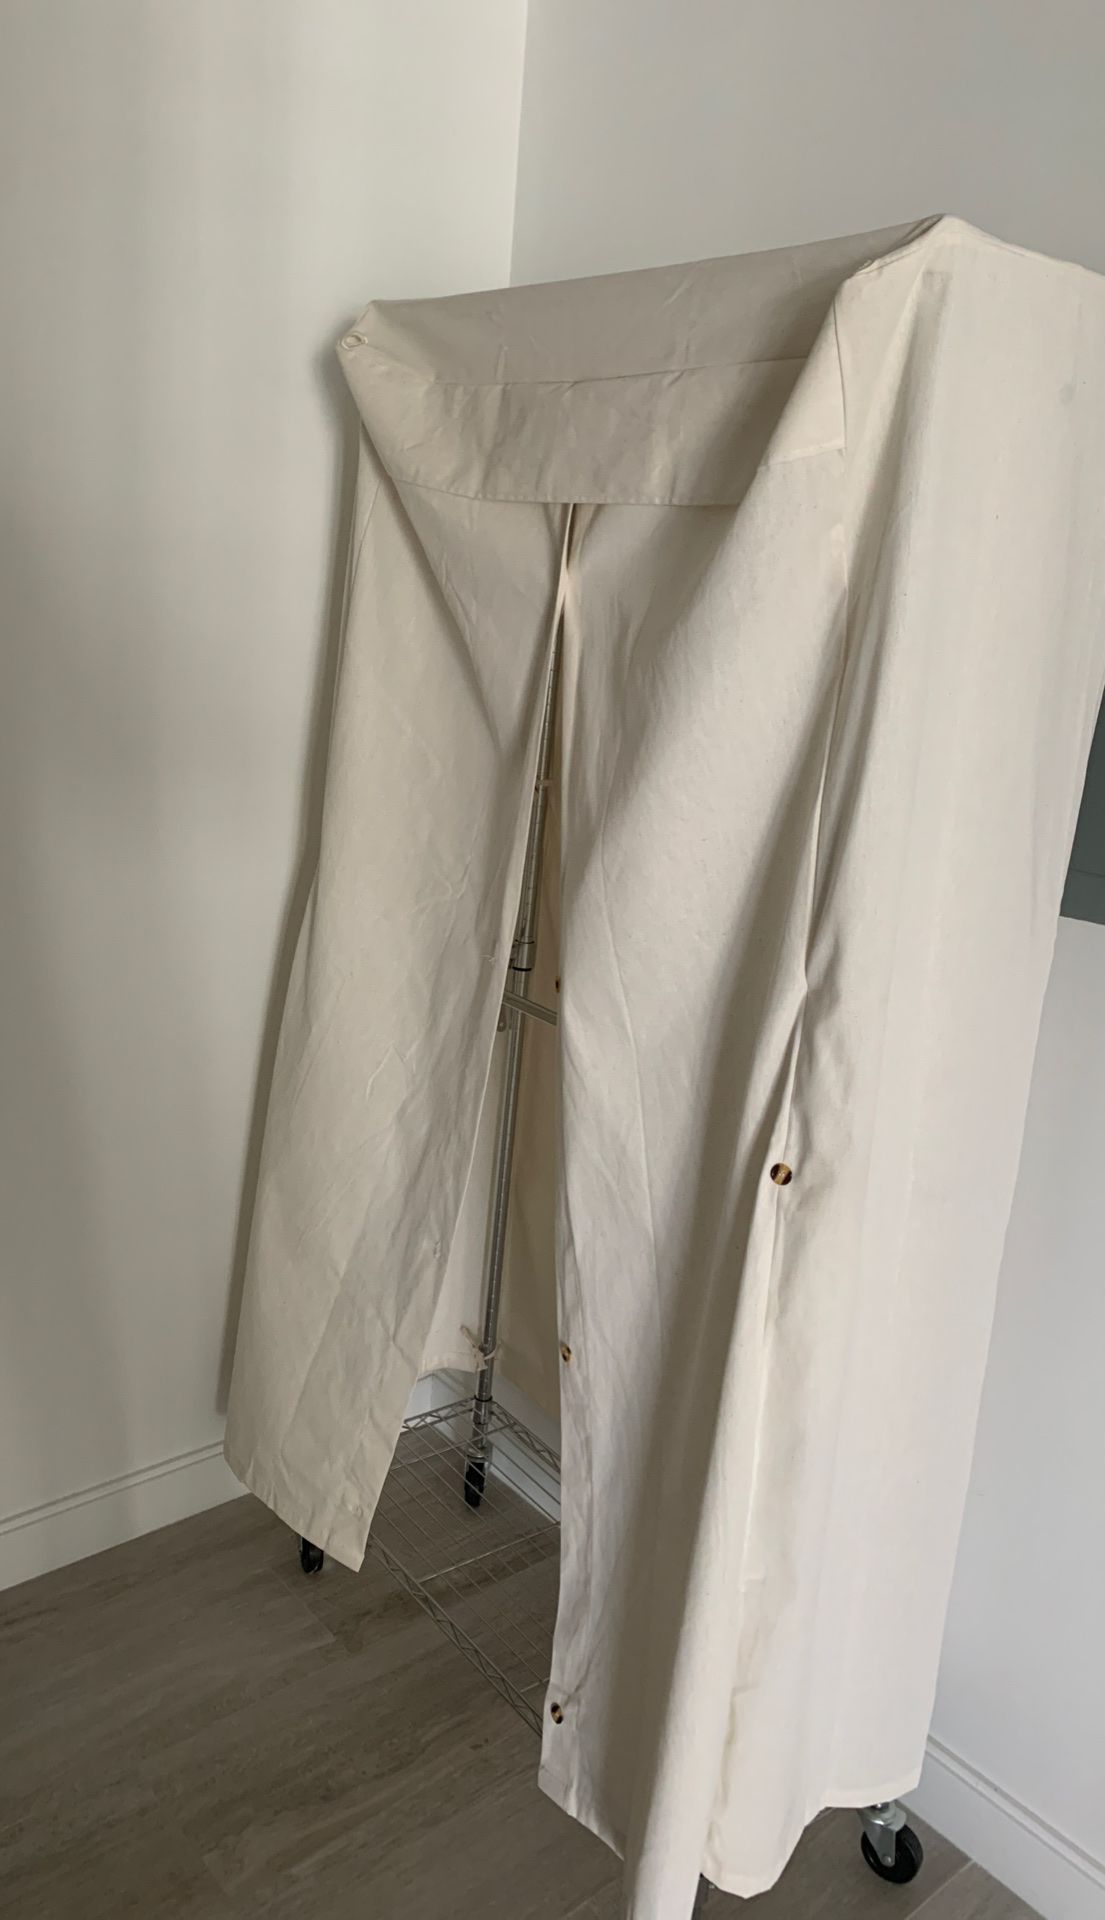 AmazonBasics Double Hanging Rod Garment Rolling Closet Organizer Rack, Chrome